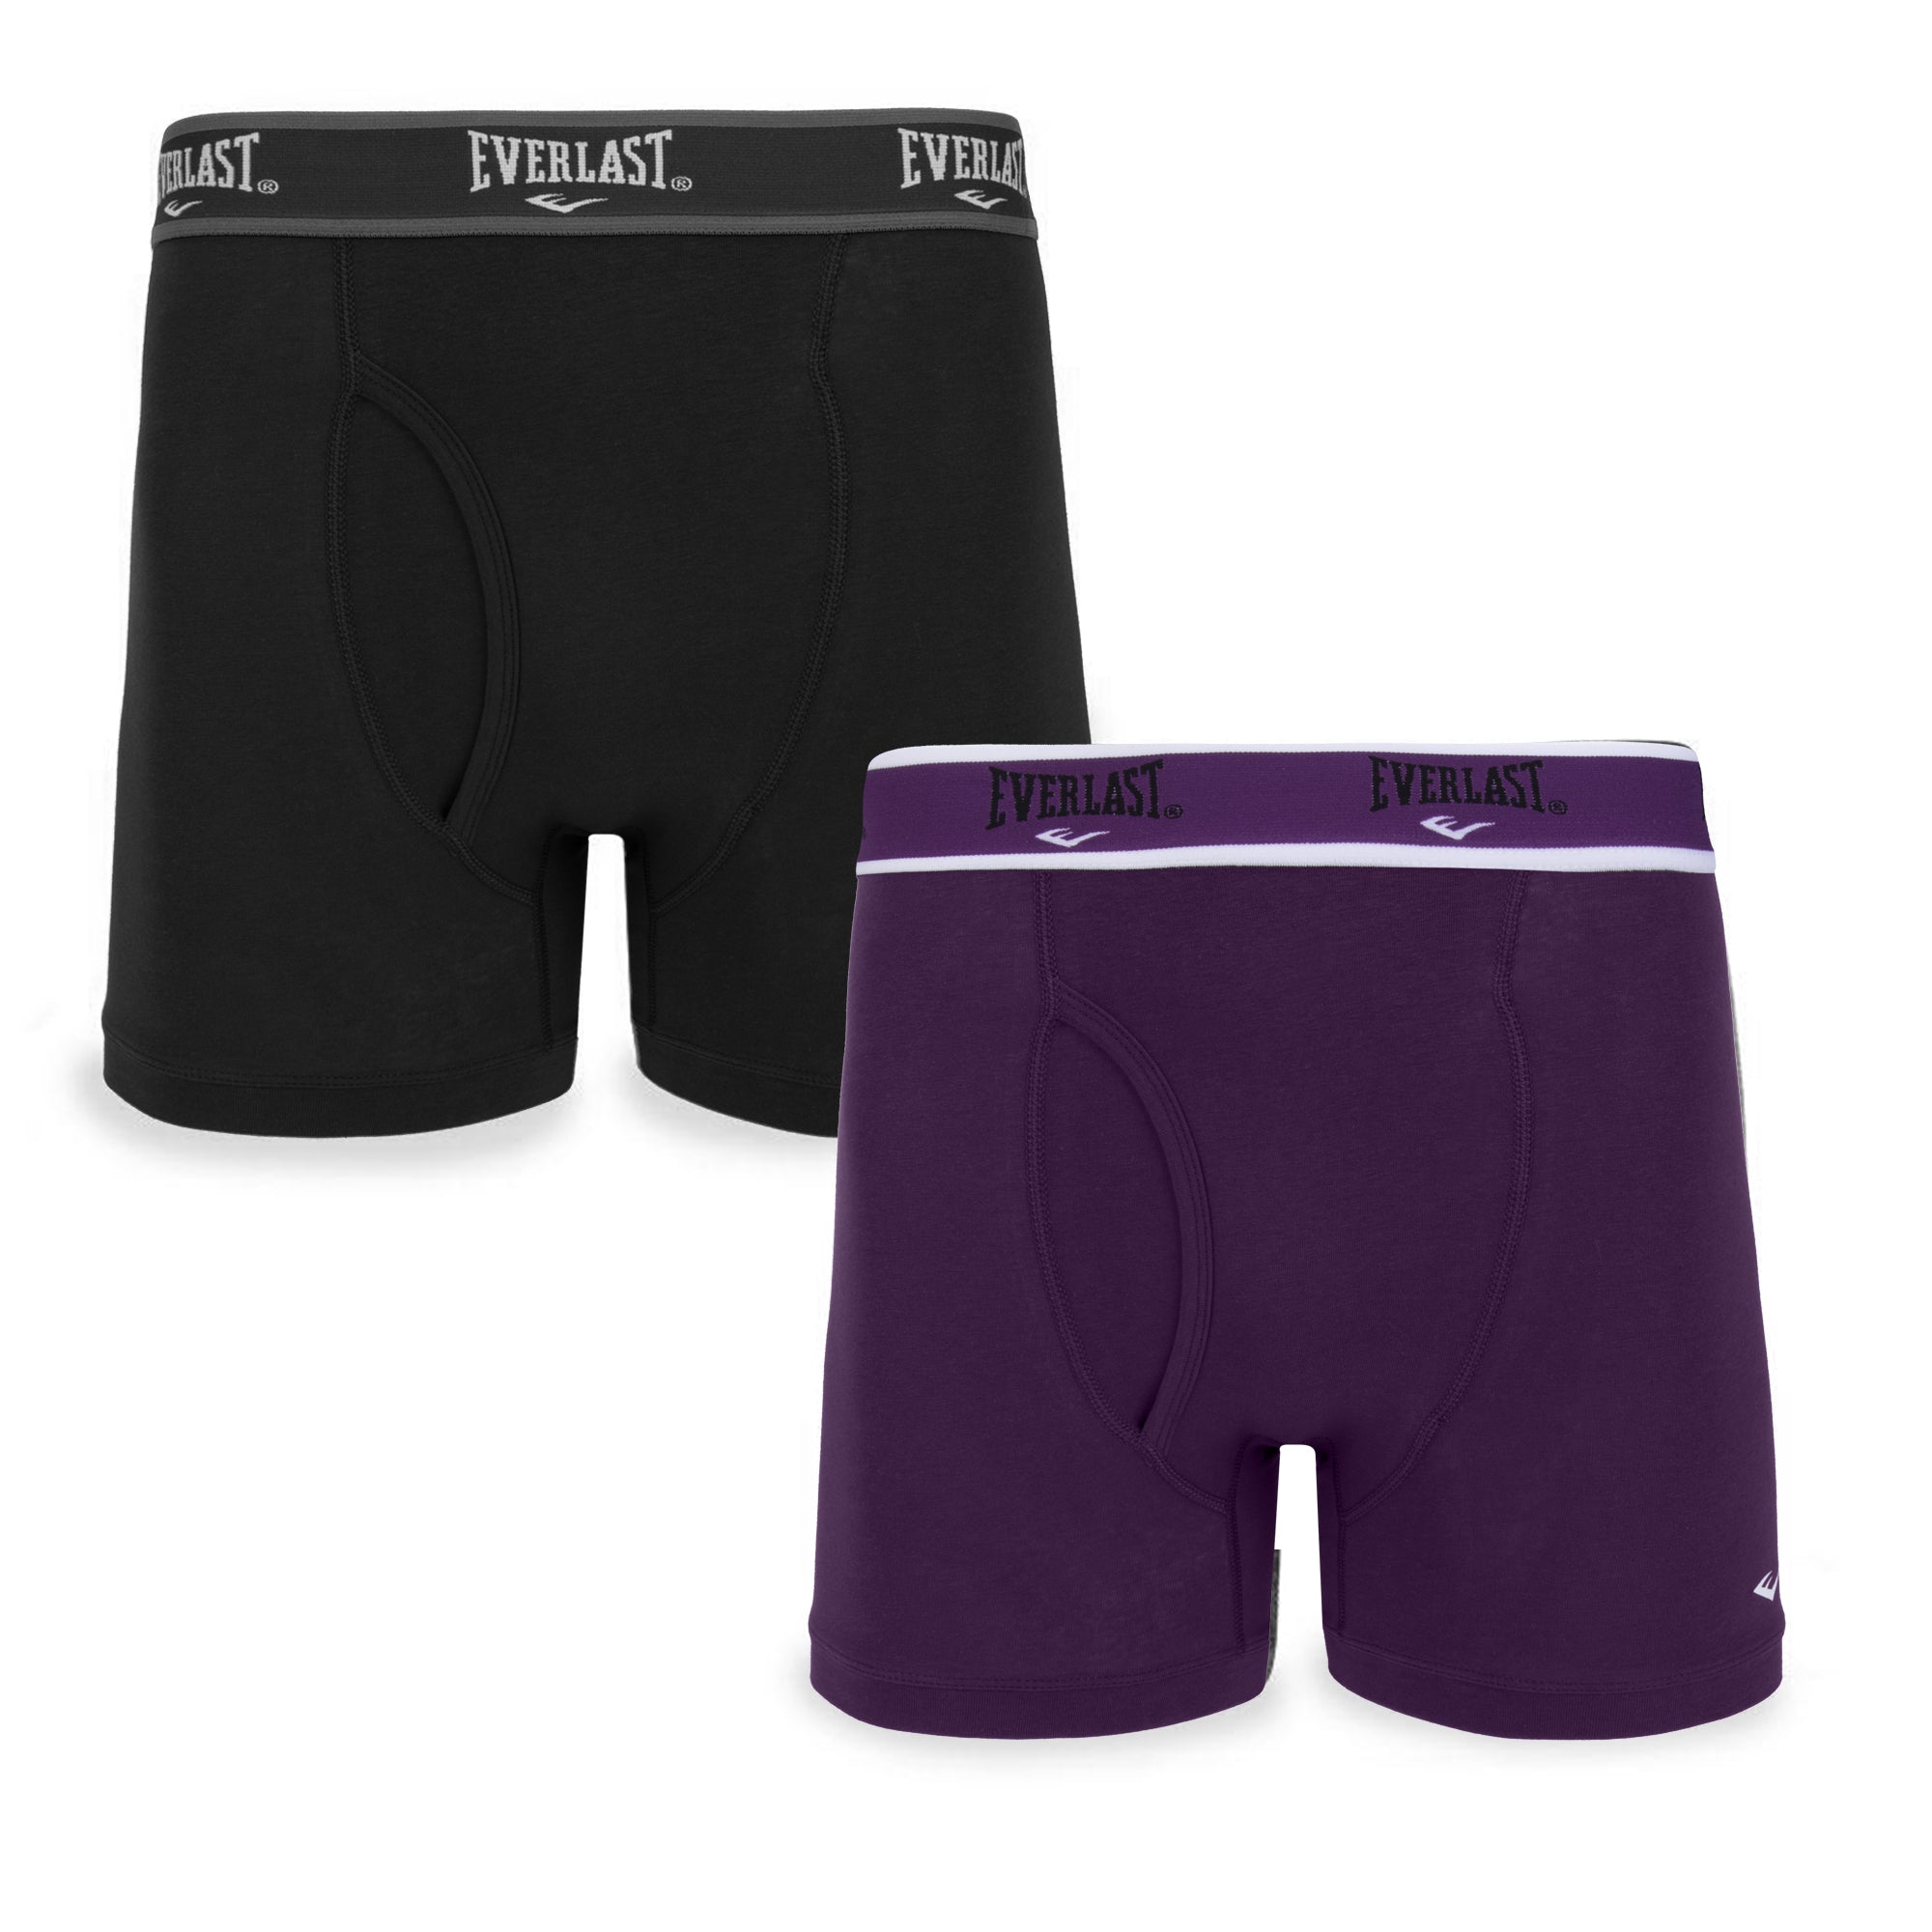 Everlast Mens Boxer Briefs Active Performance Breathable Underwear for Men,  Black/Blue Large 6-Pack